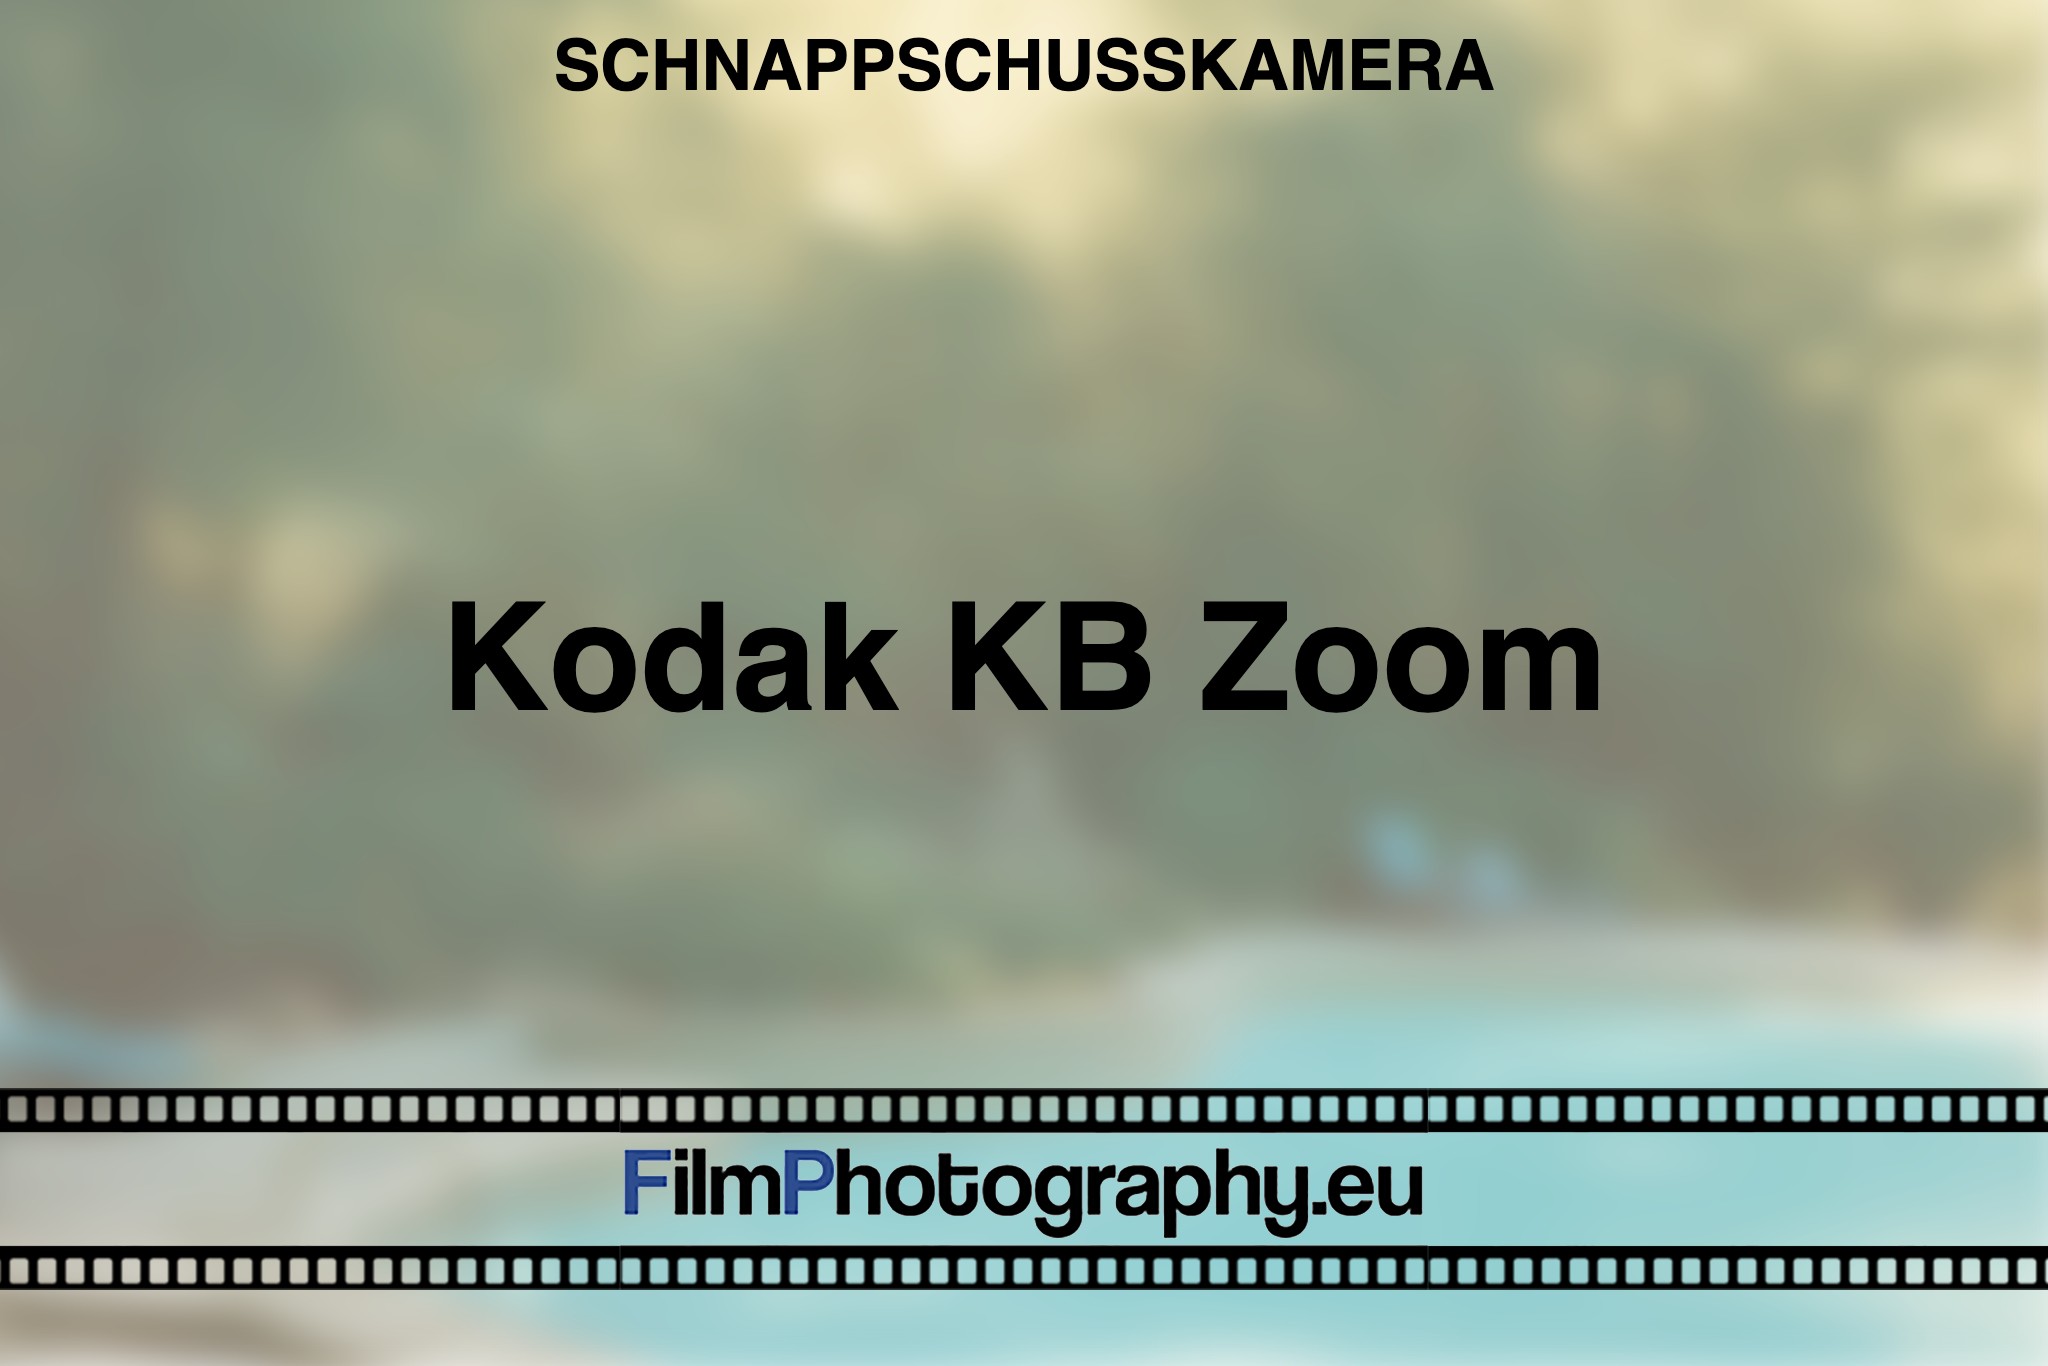 kodak-kb-zoom-schnappschusskamera-bnv